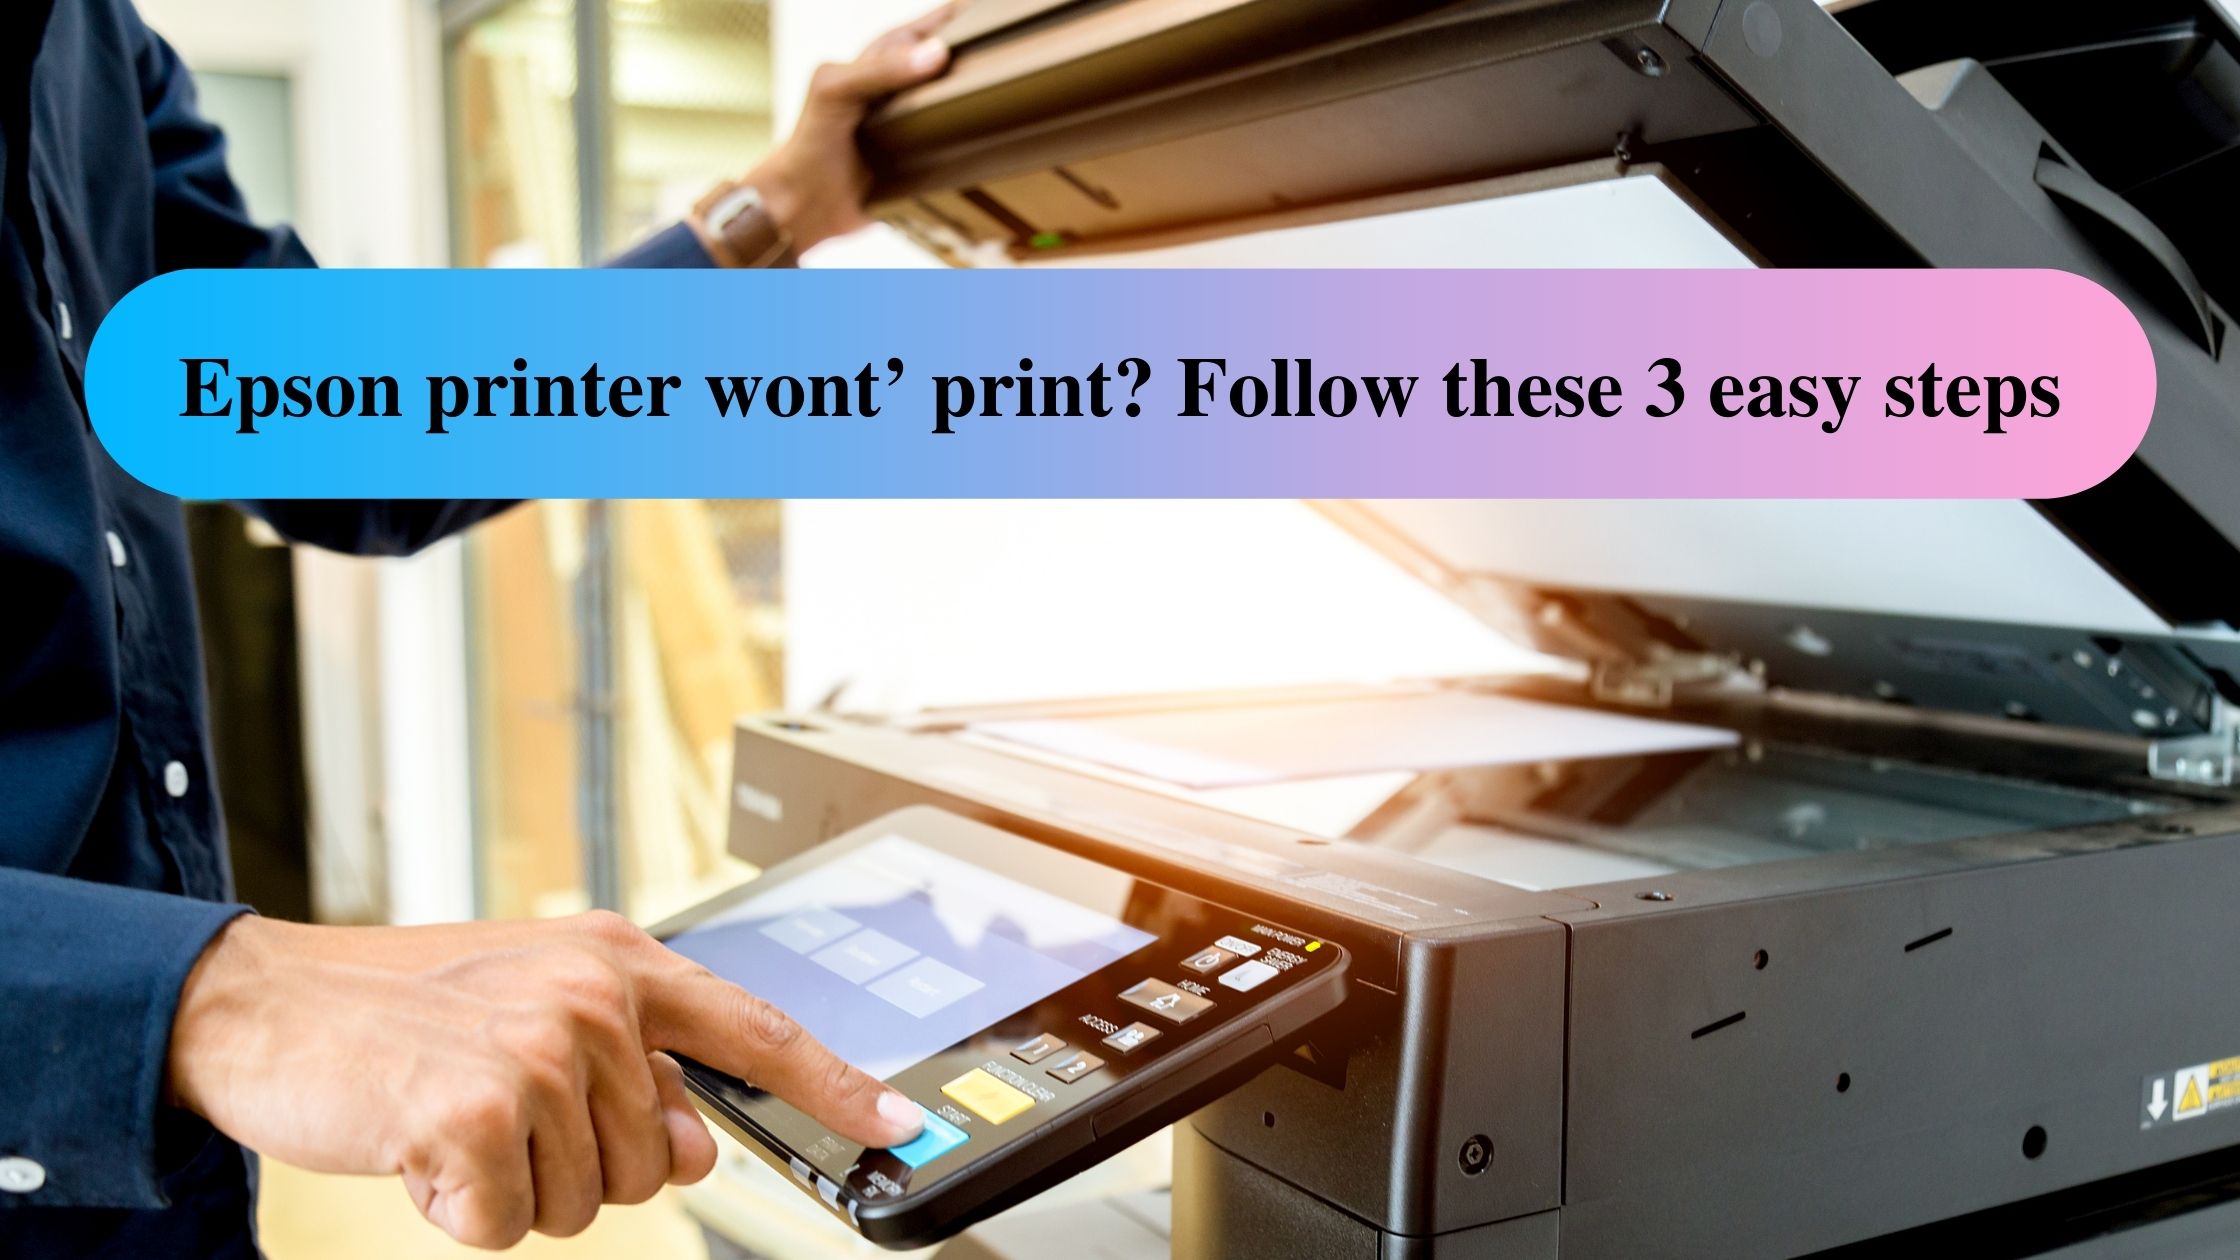 Epson printer wont’ print_ Follow these 3 easy steps